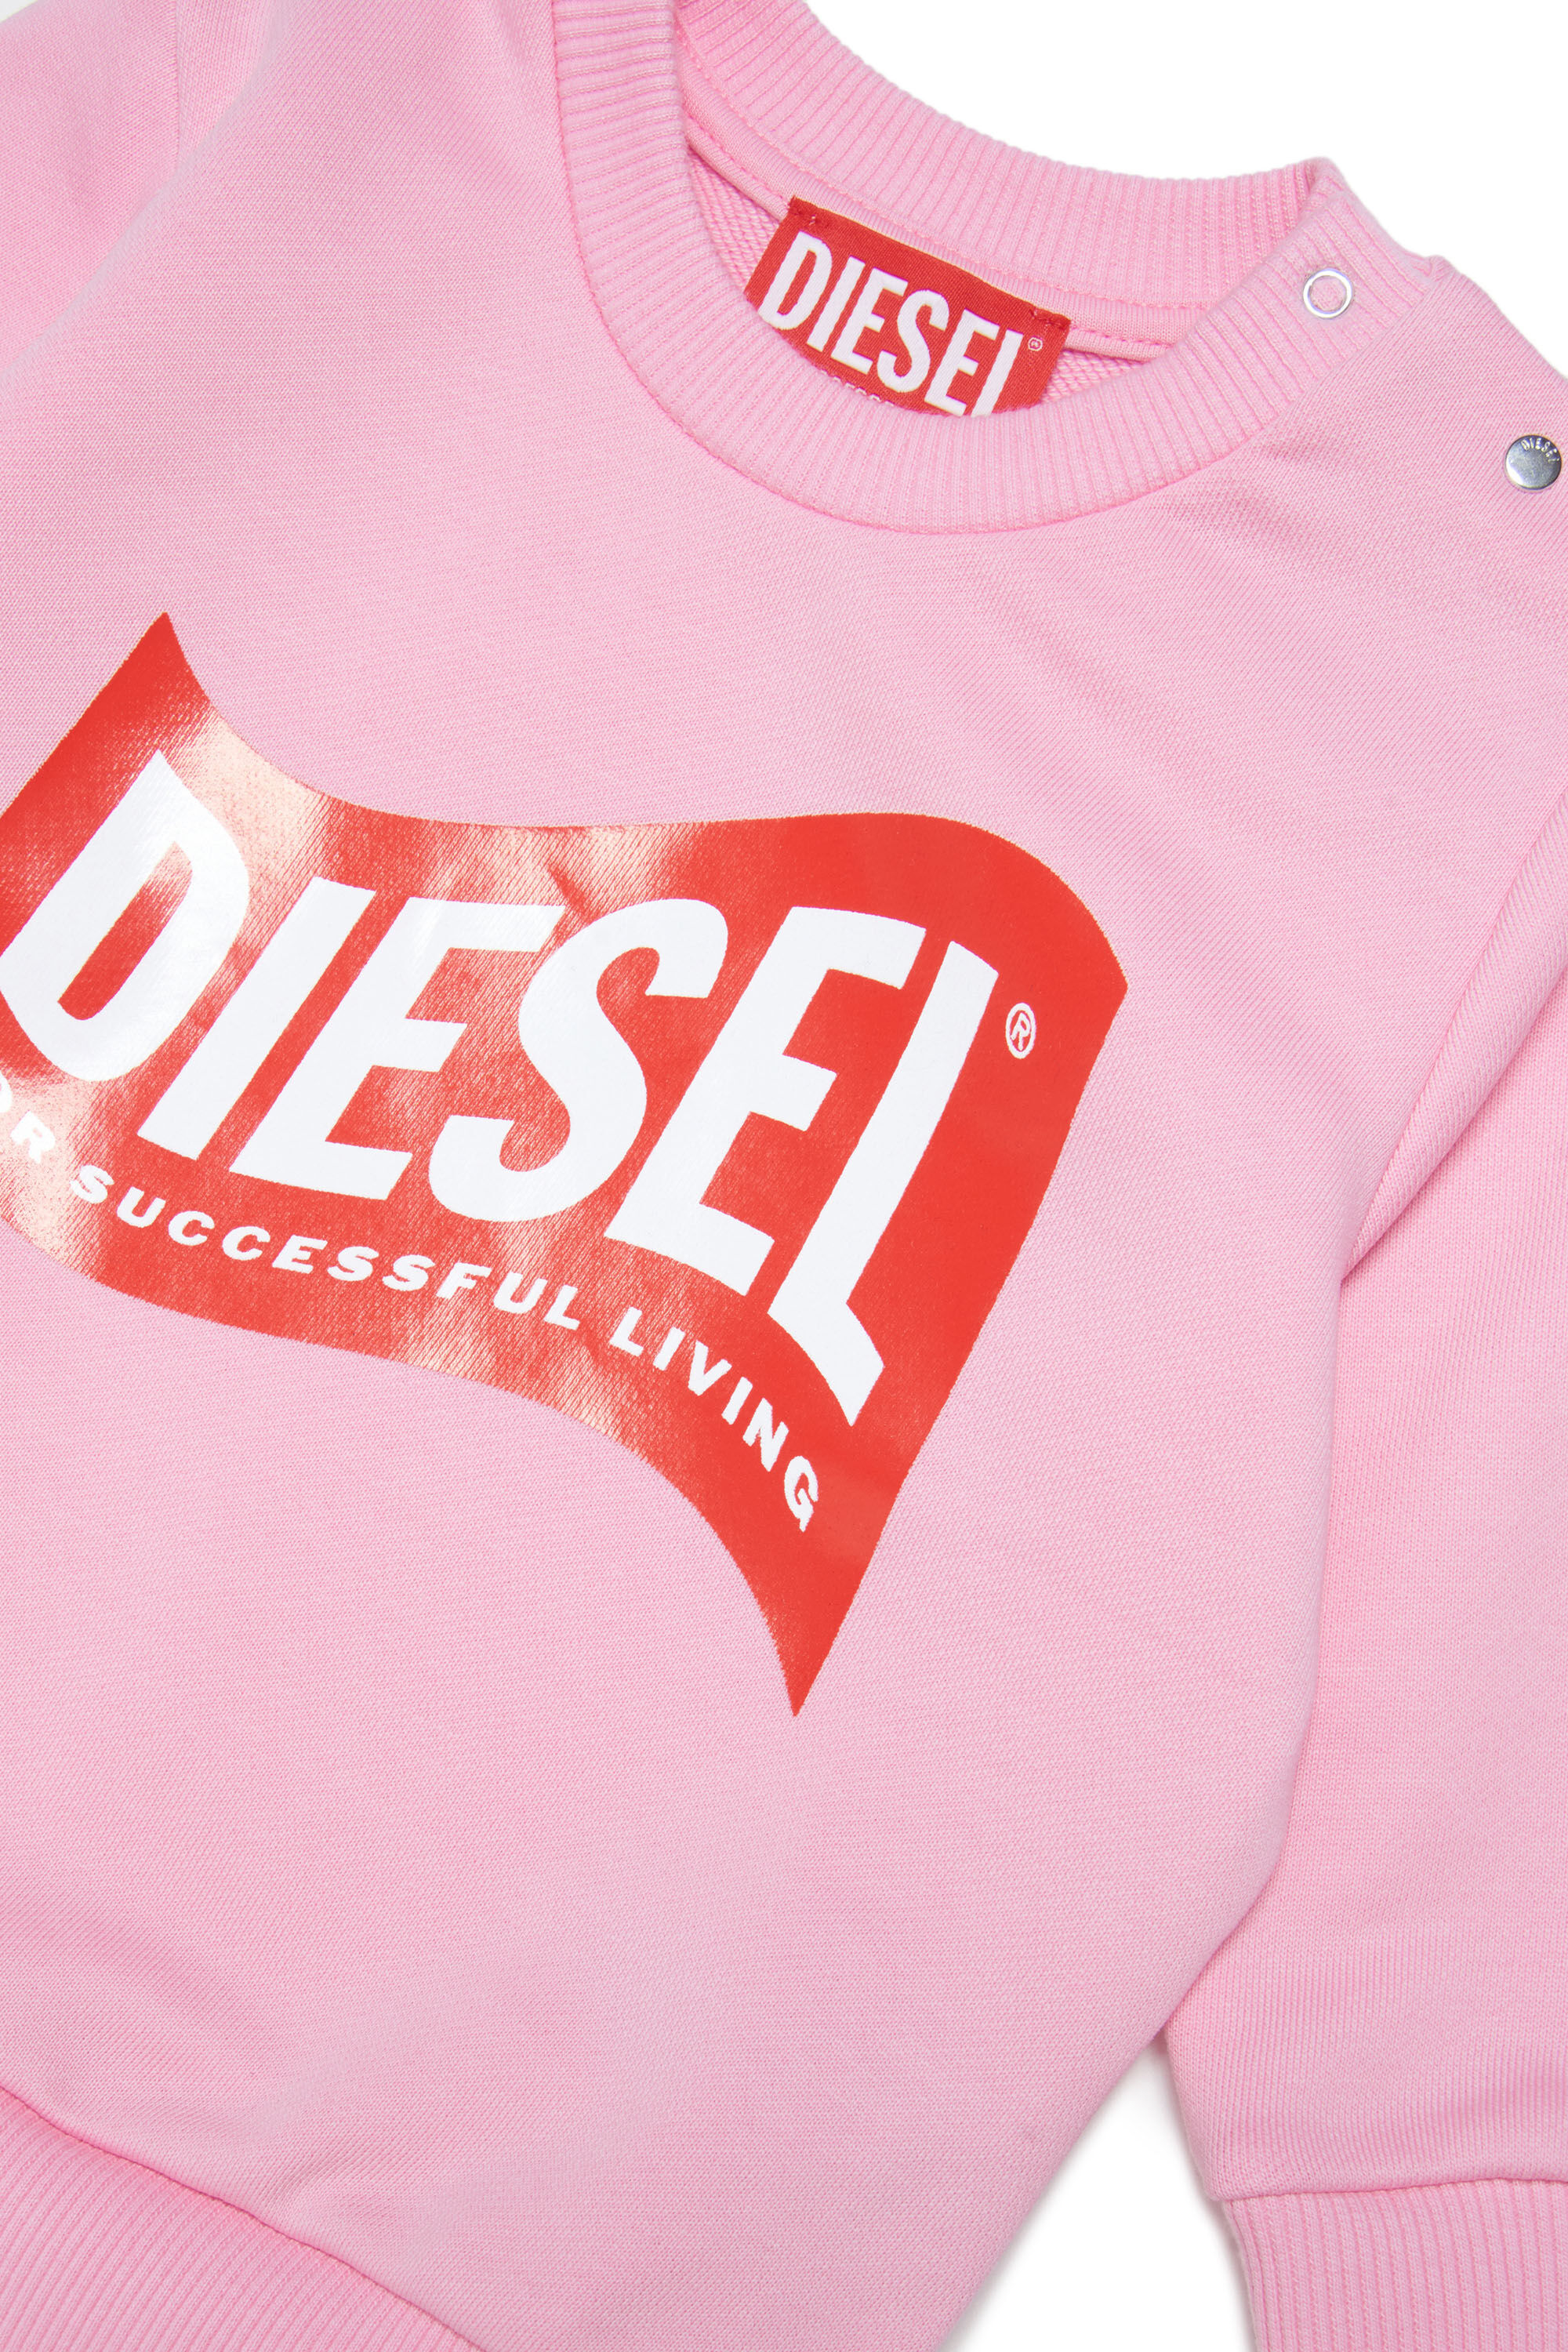 Diesel - SANNYB, Pink - Image 3